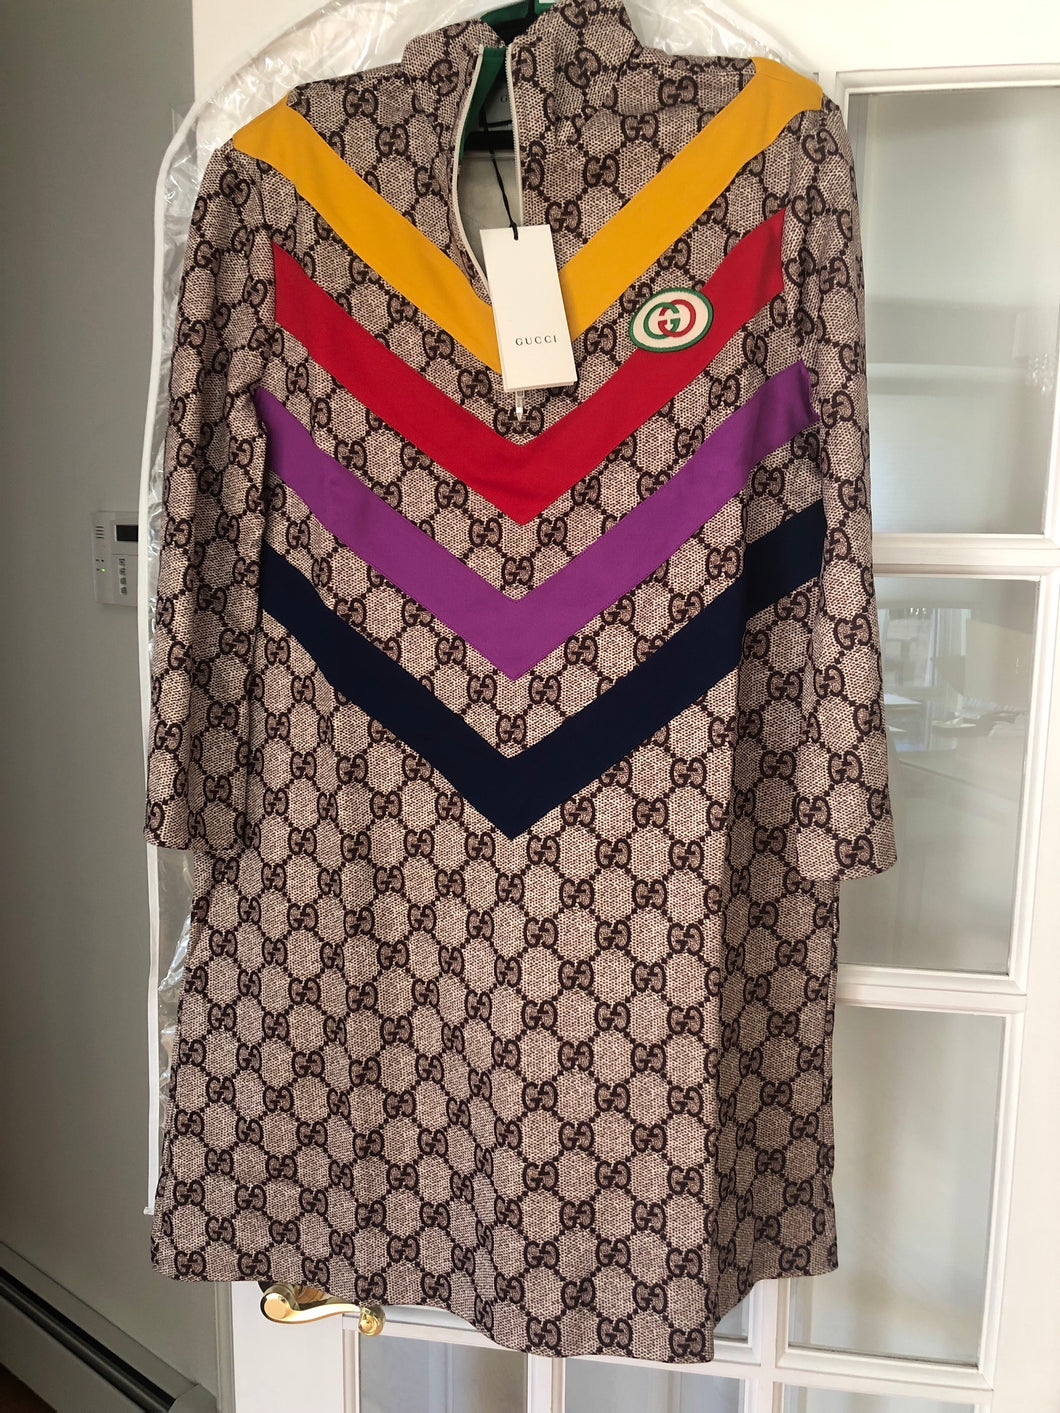 Gucci GG Supreme Jersey Dress with Chevron Stripes